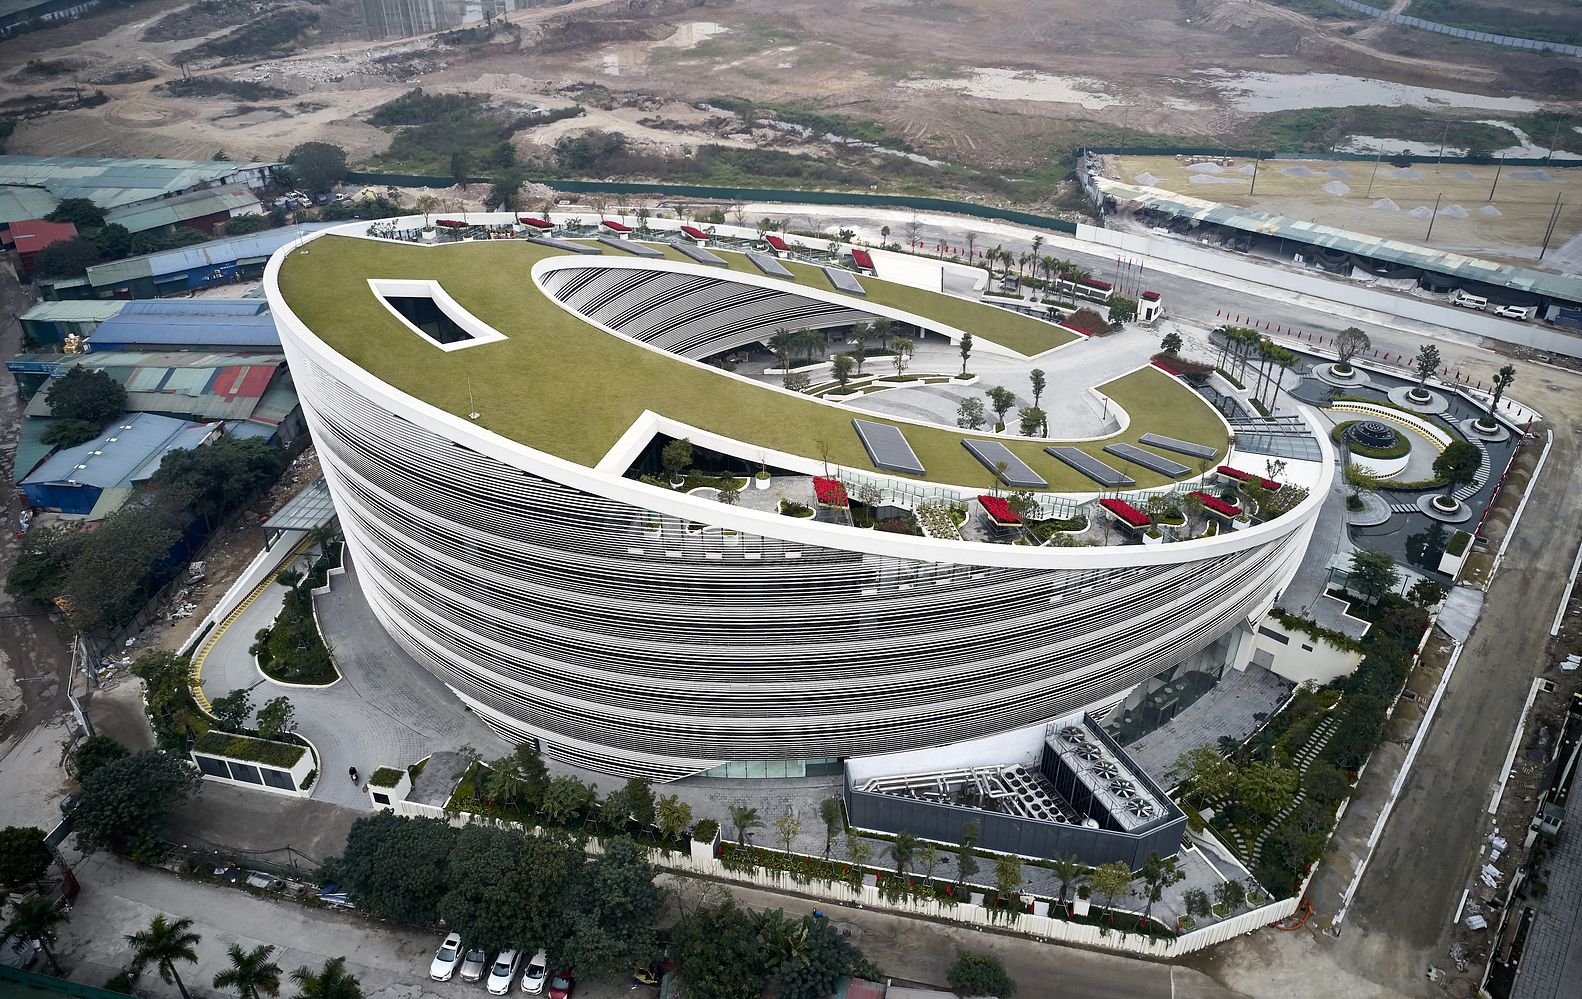 photos-an-aerial-view-of-viettel-s-futuristic-new-headquarters-in-cau